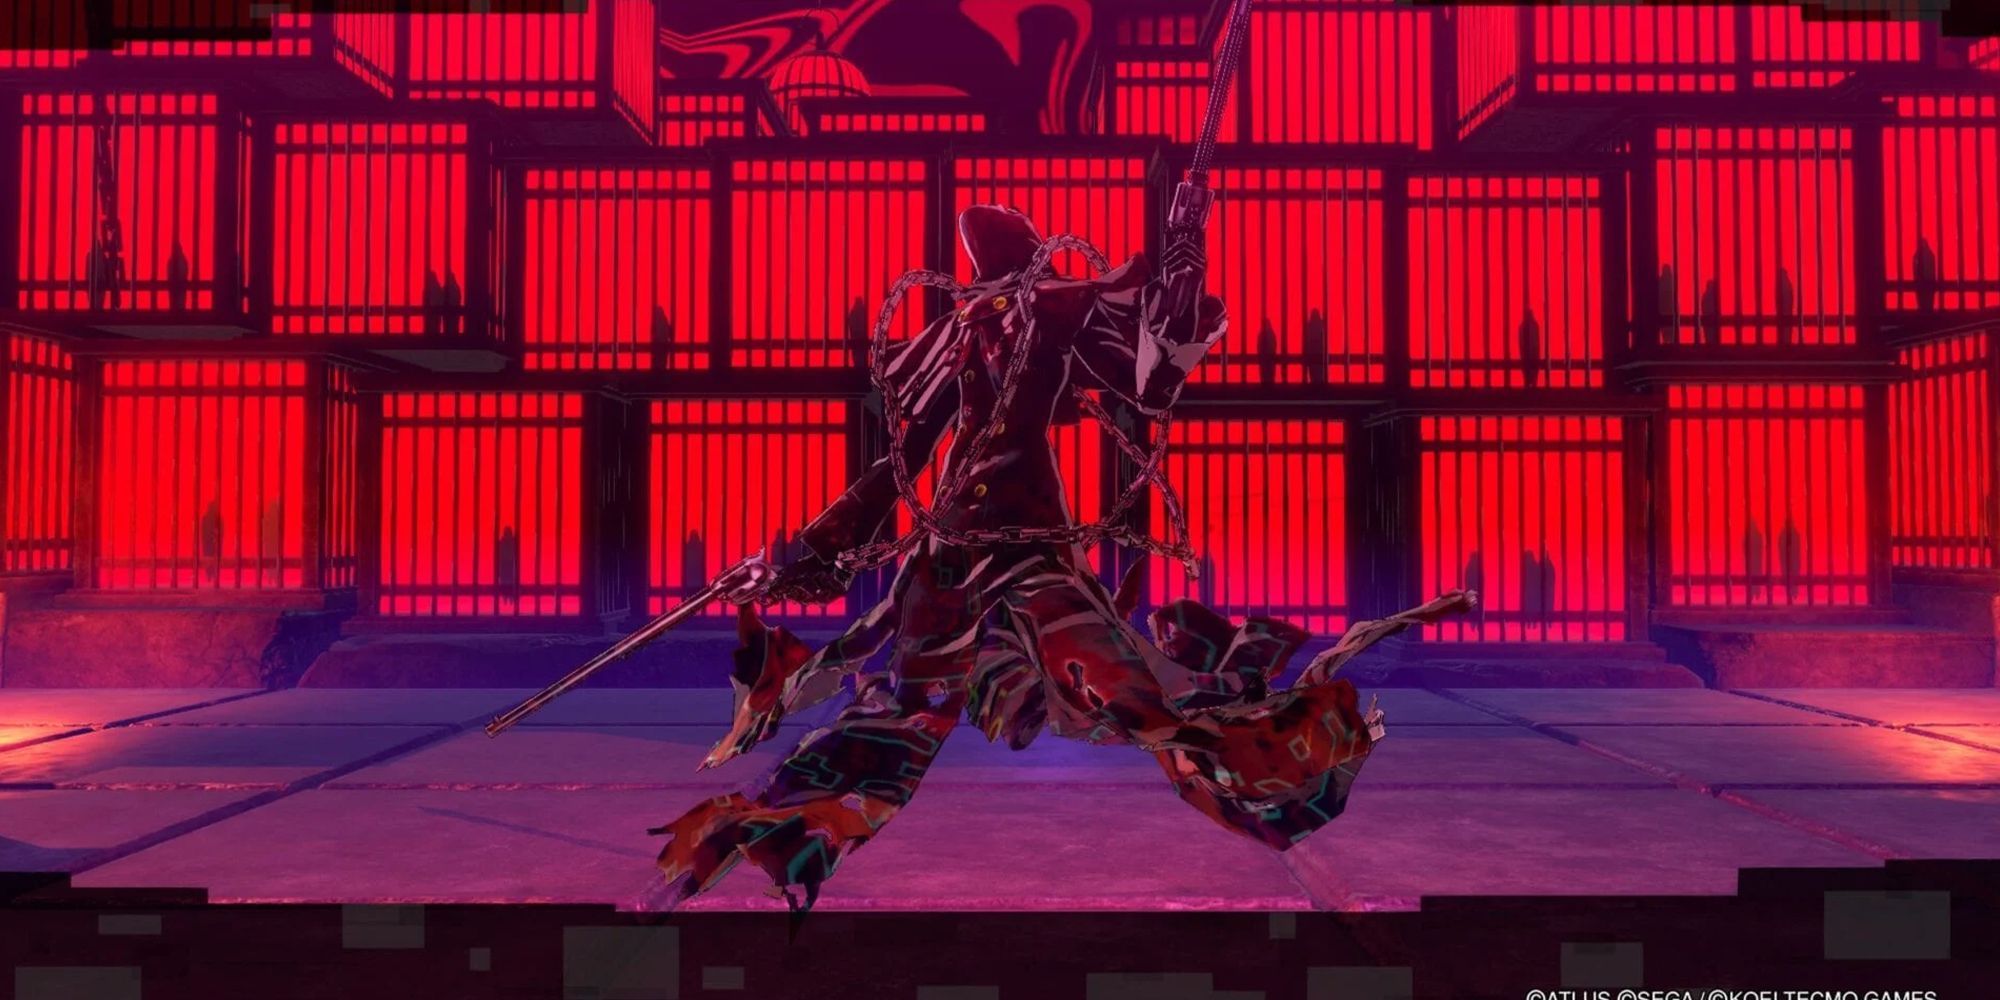 Reaper boss fight in Persona 5